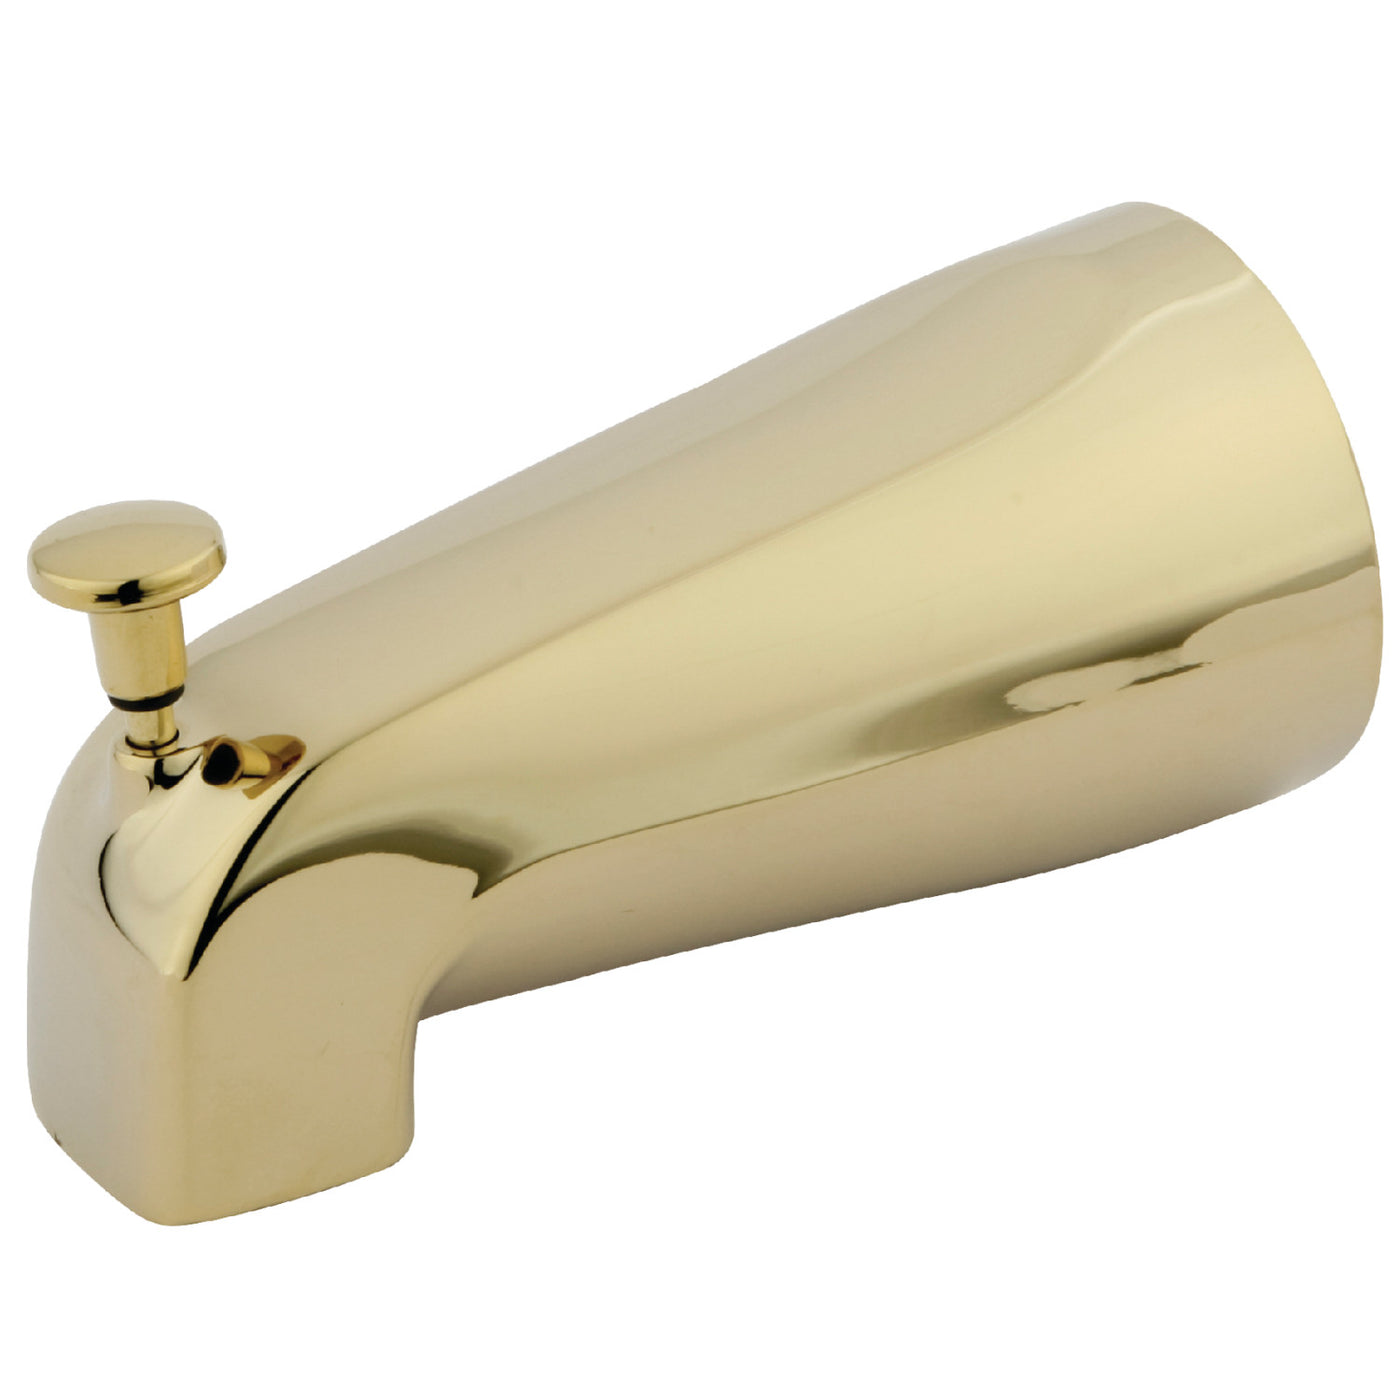 Elements of Design DK188A2 5-1/4 Inch Zinc Tub Spout with Diverter, Polished Brass